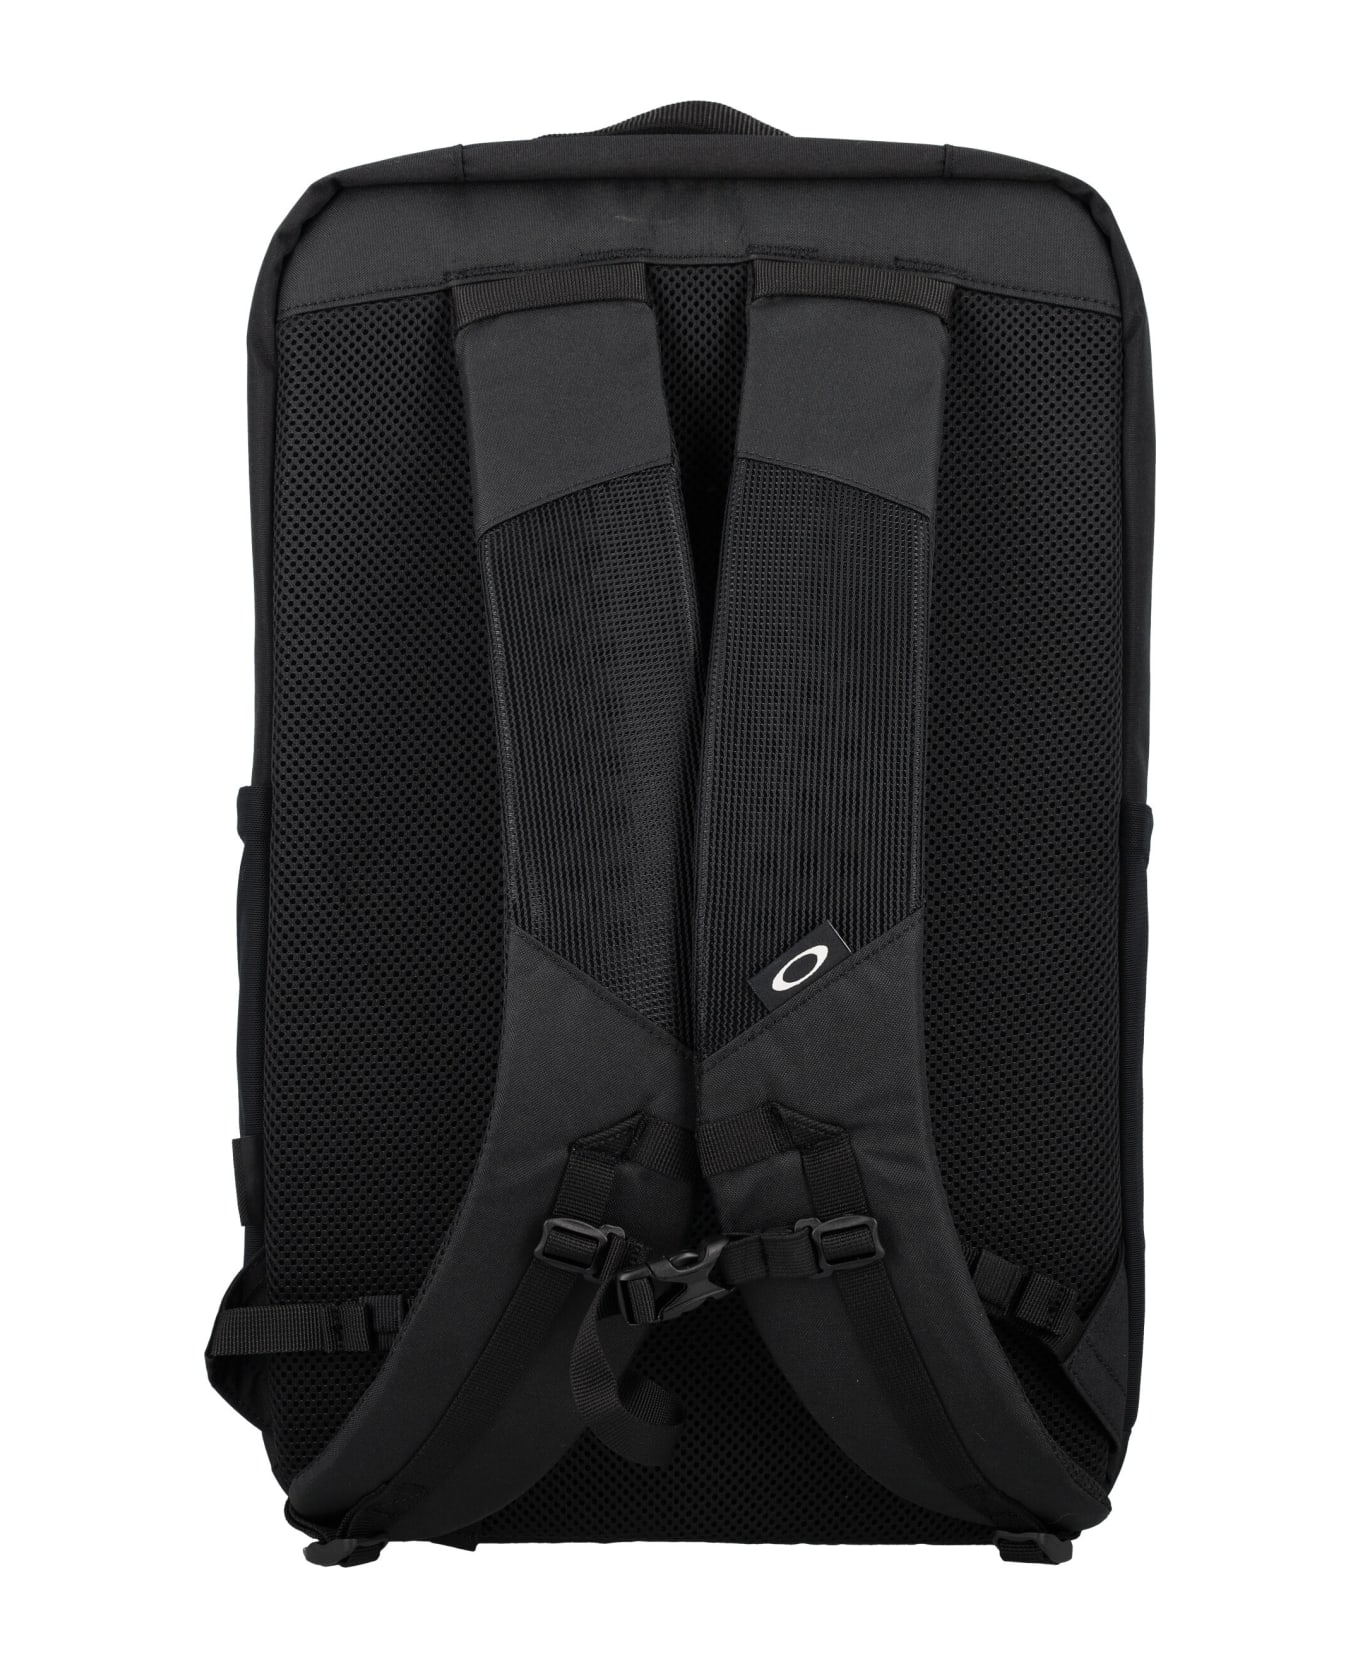 Oakley Essential Backpack M 8.0 - BLACKOUT